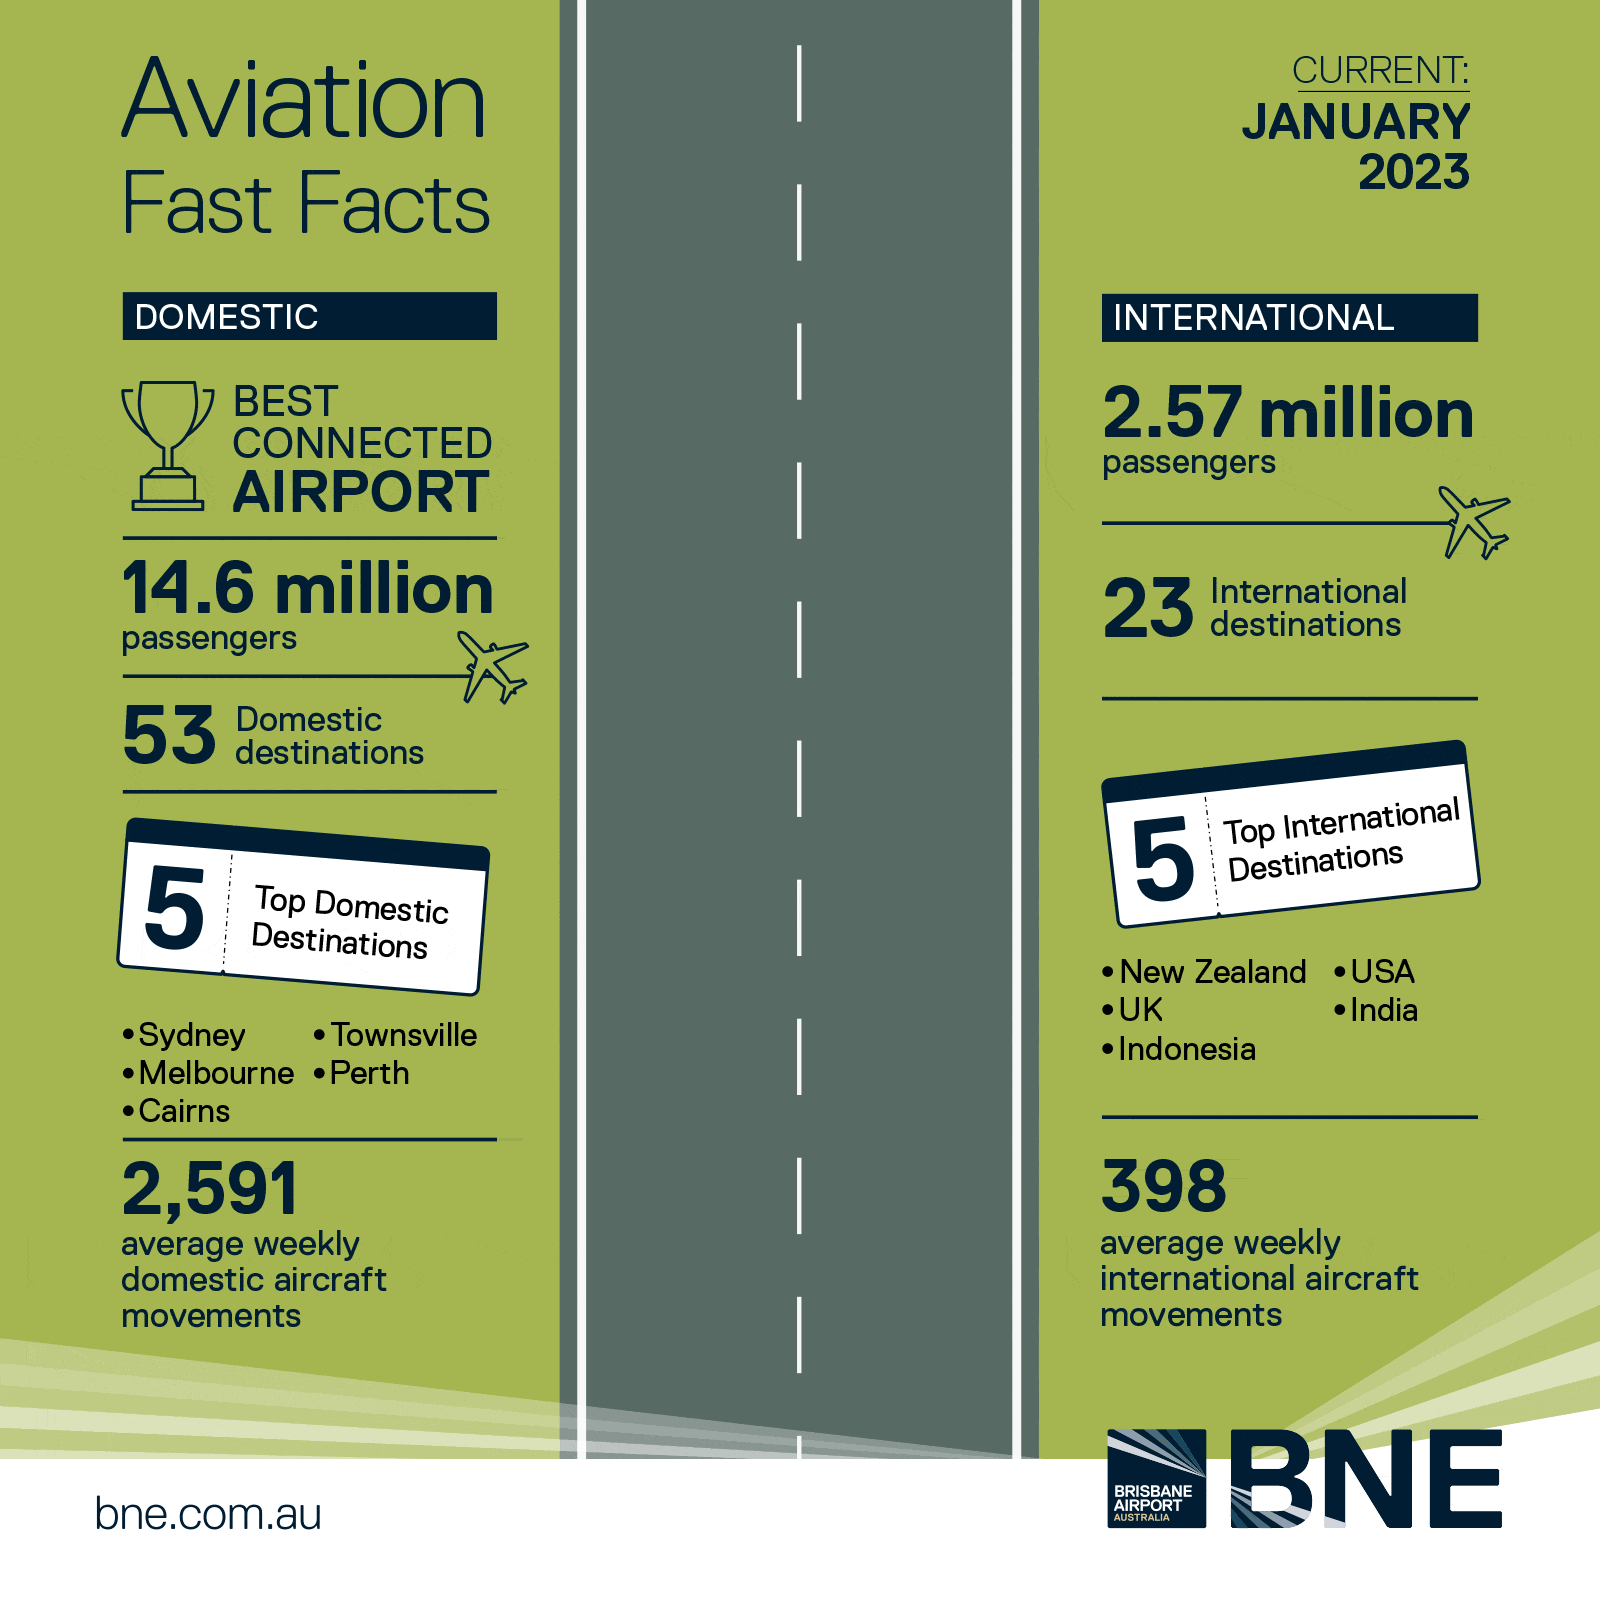 Brisbane Airport Aviation Fast Facts